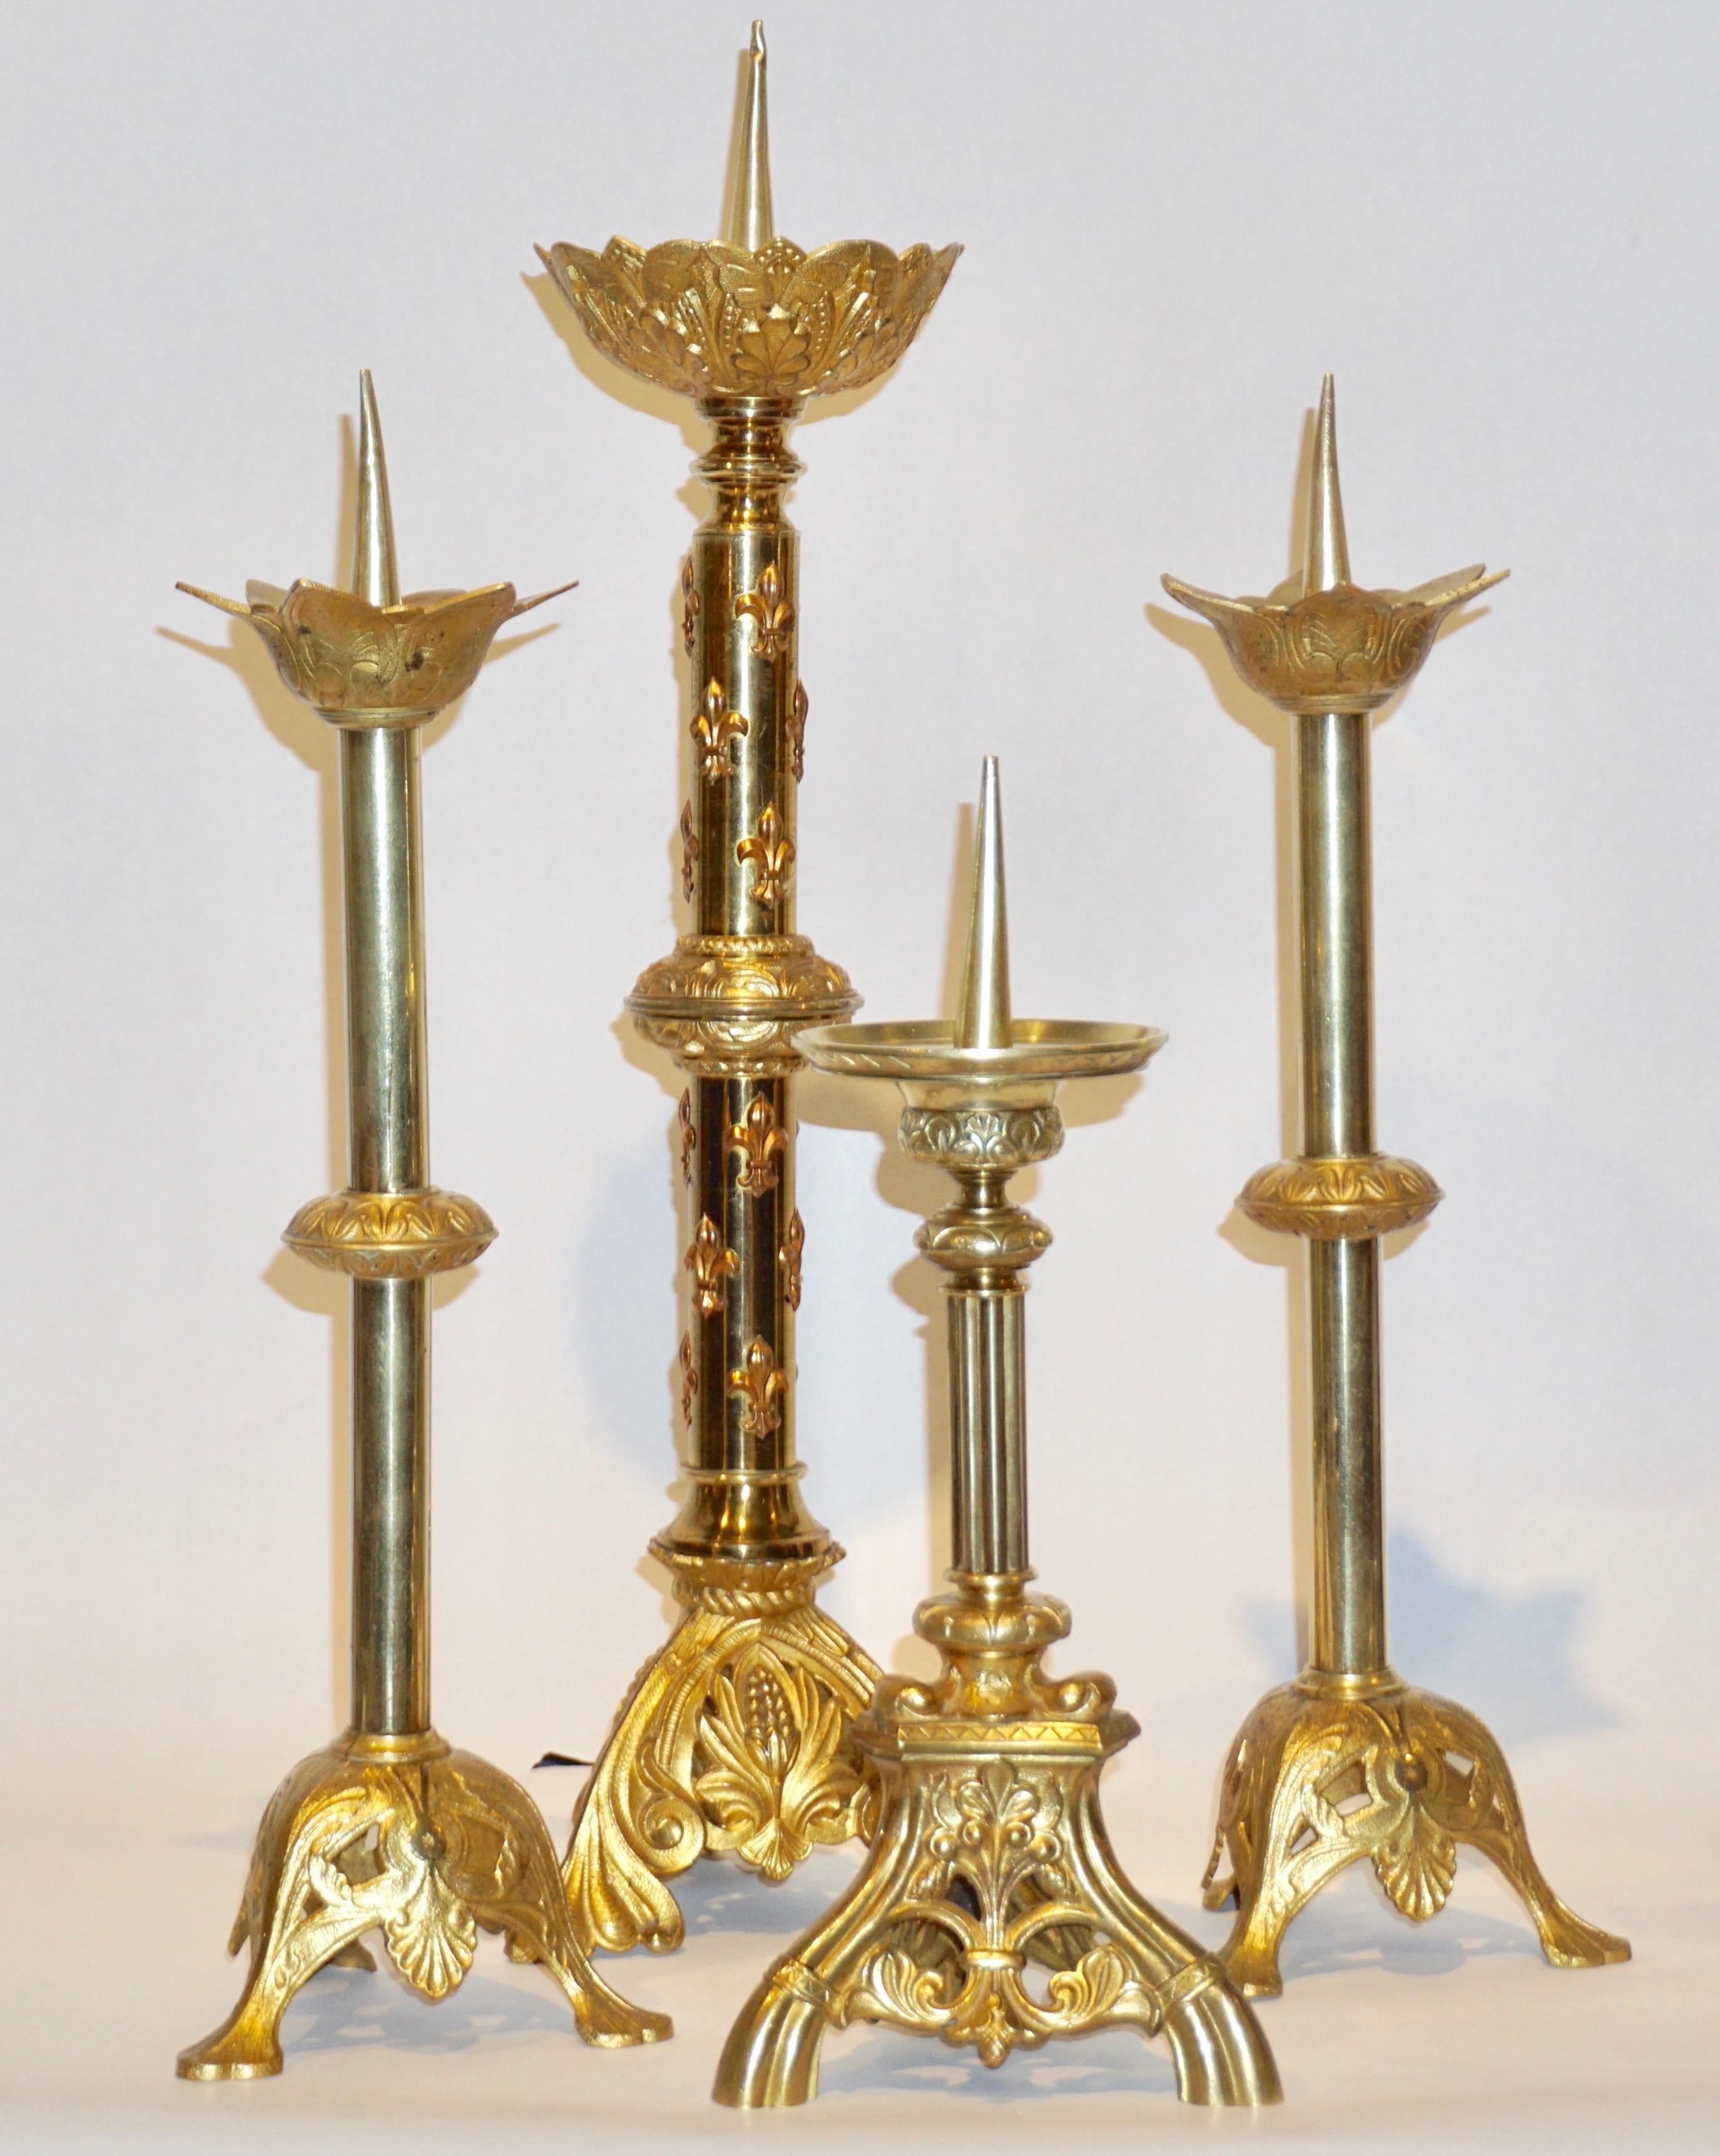 1880s French Baroque Revival Gilt Bronze Ormolu Pricket Candlestick 4